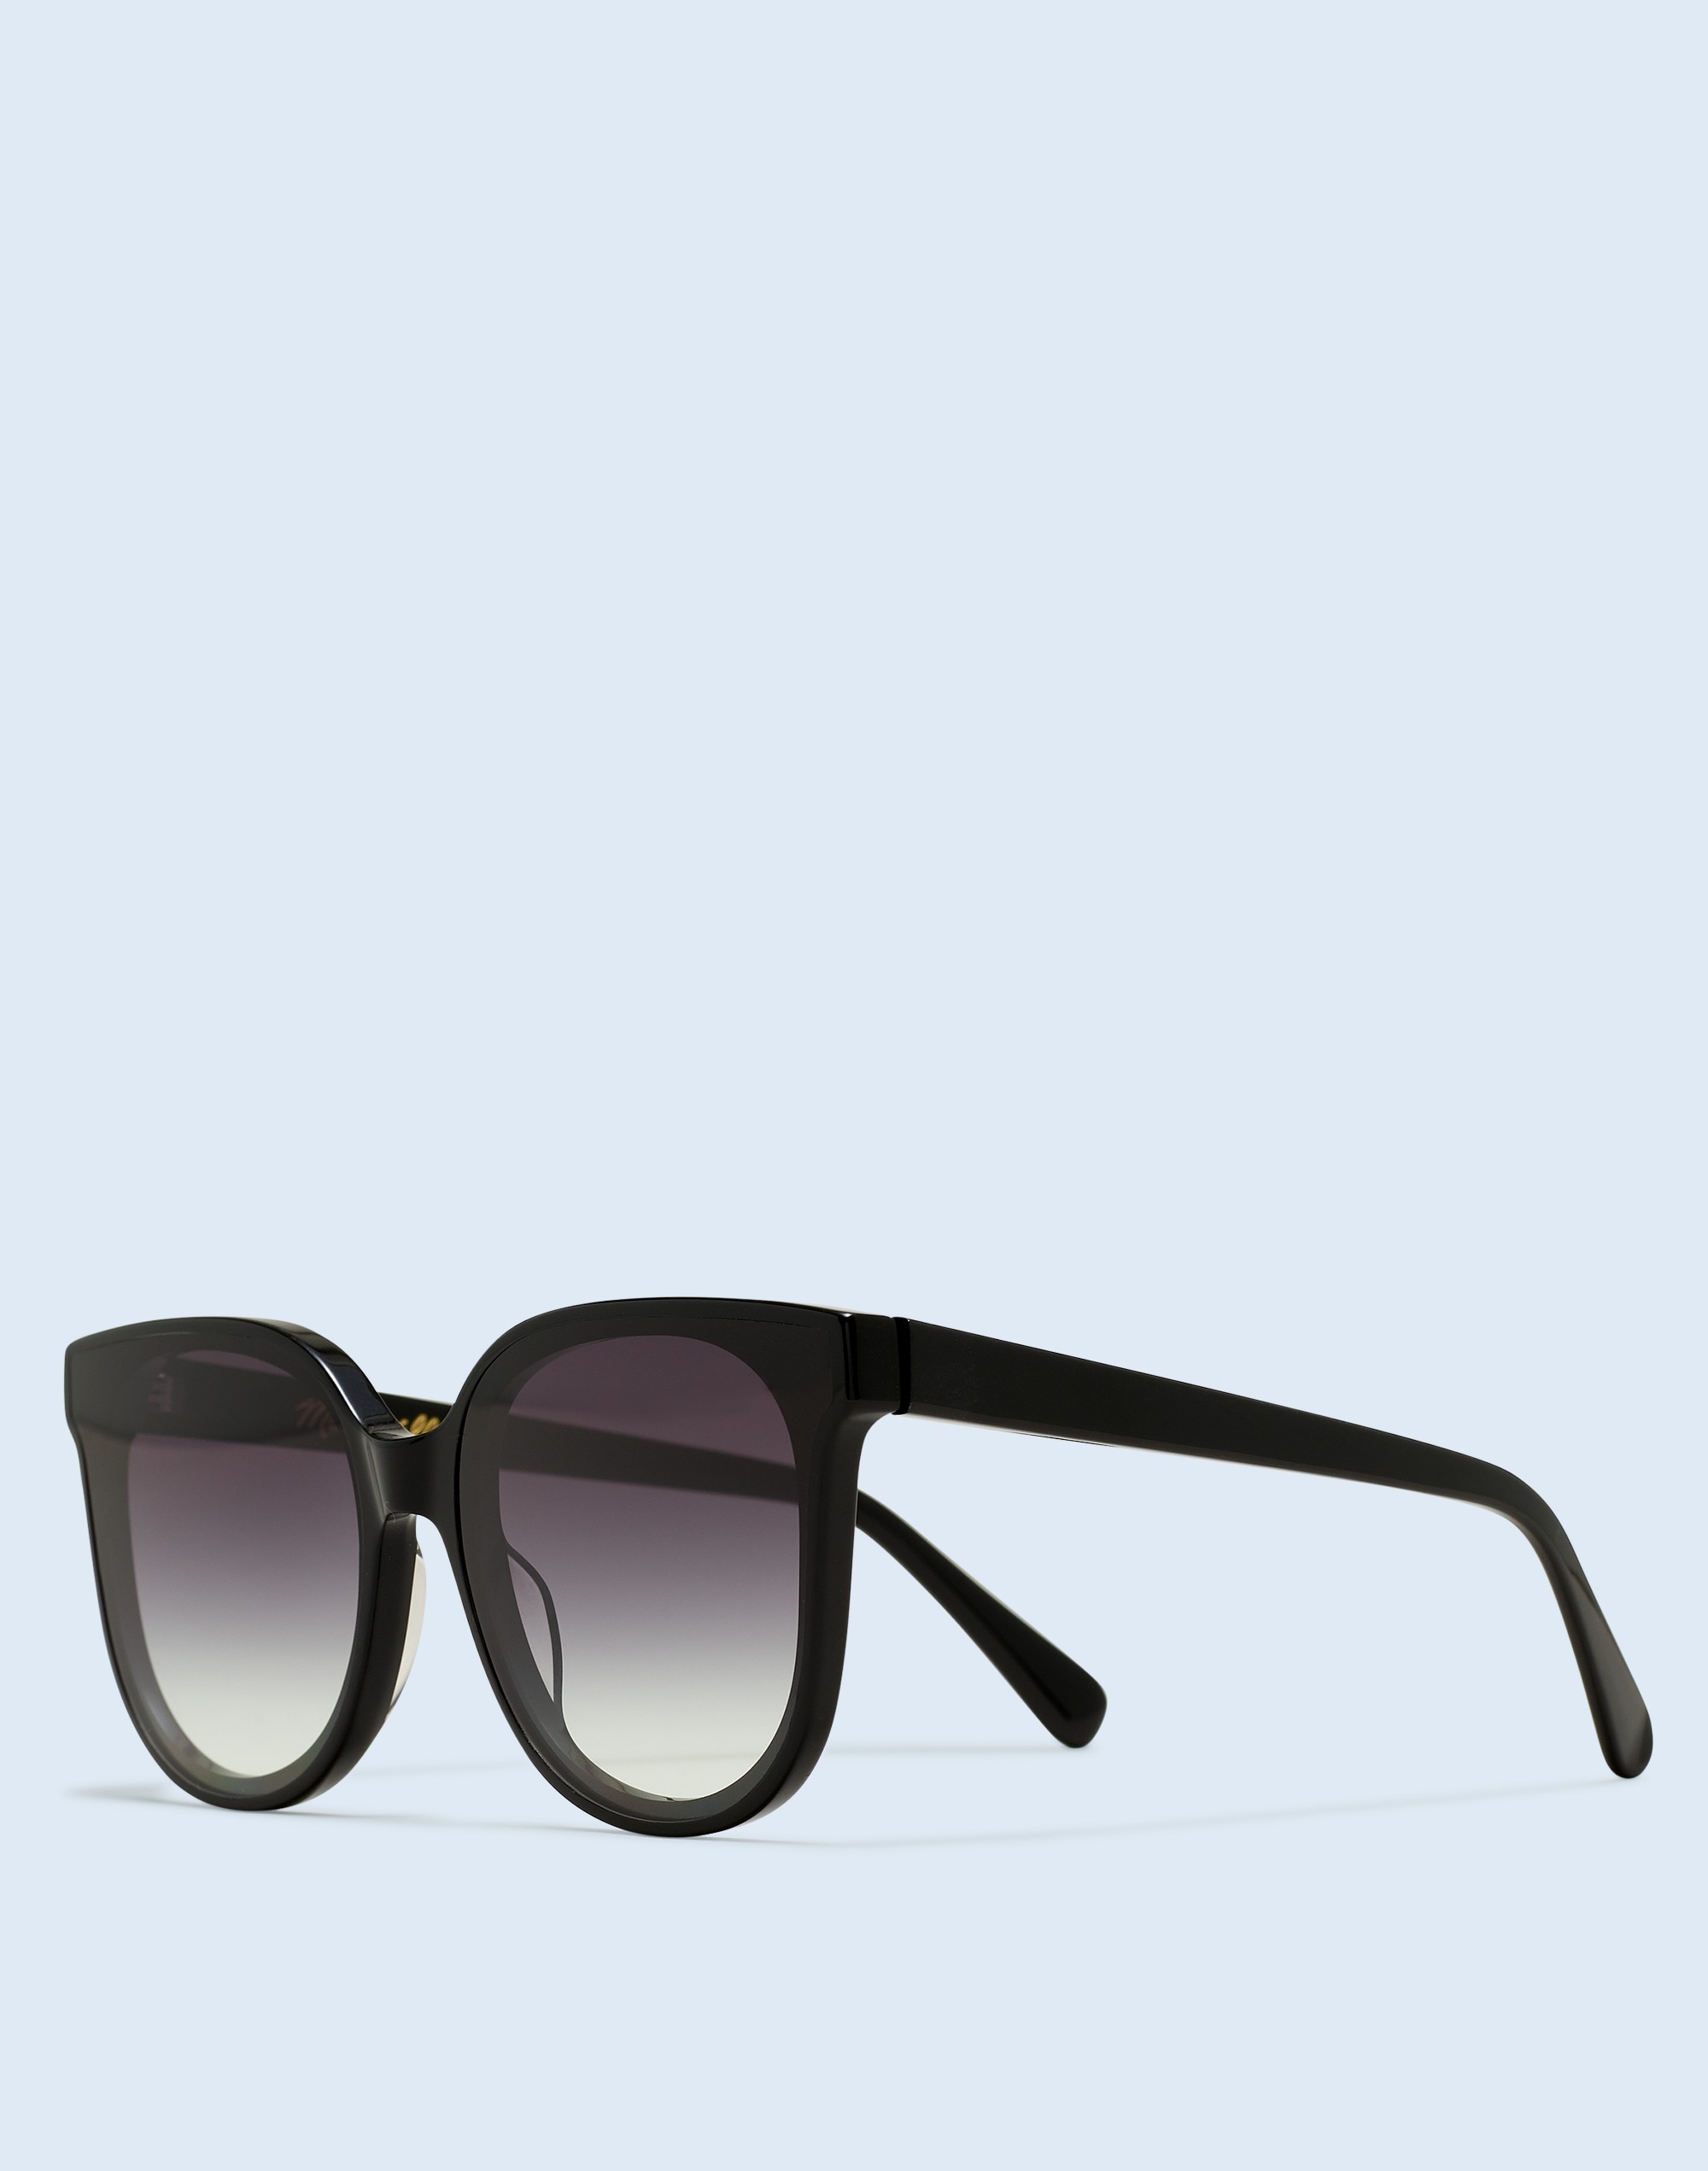 Mw Holwood Sunglasses In True Black